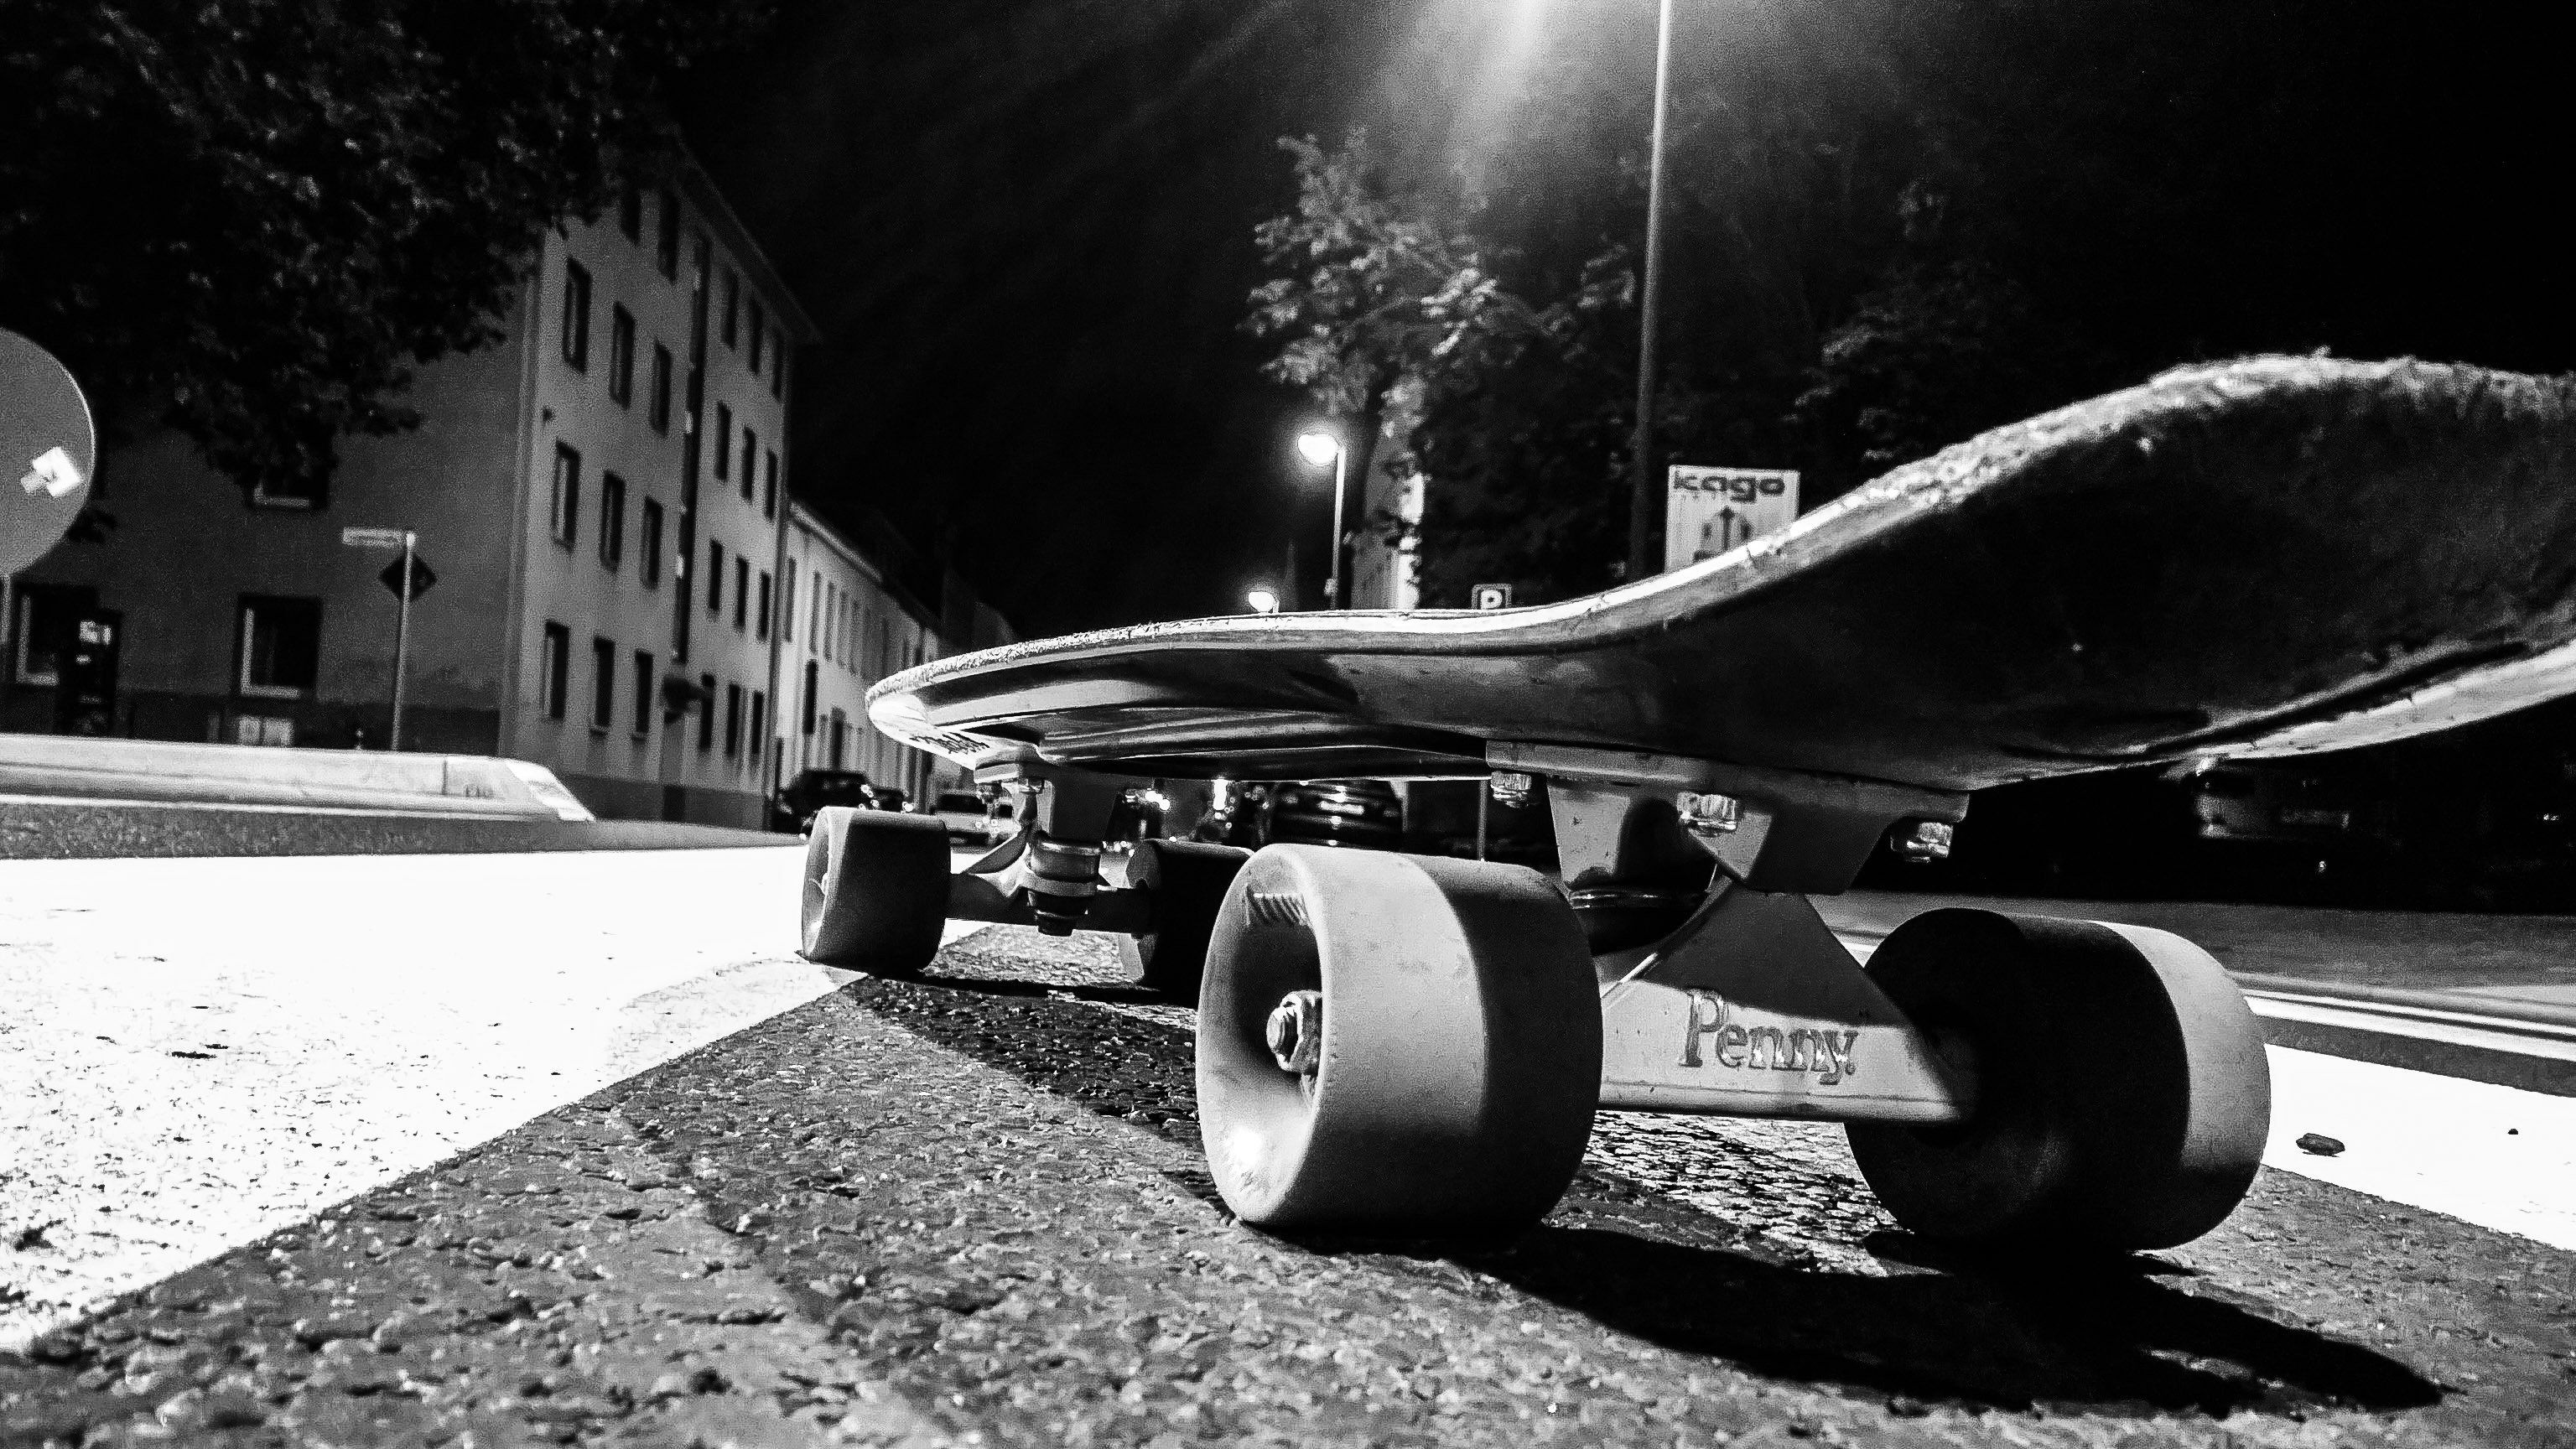 Penny Skateboards Skateboard Monochrome Streets Night